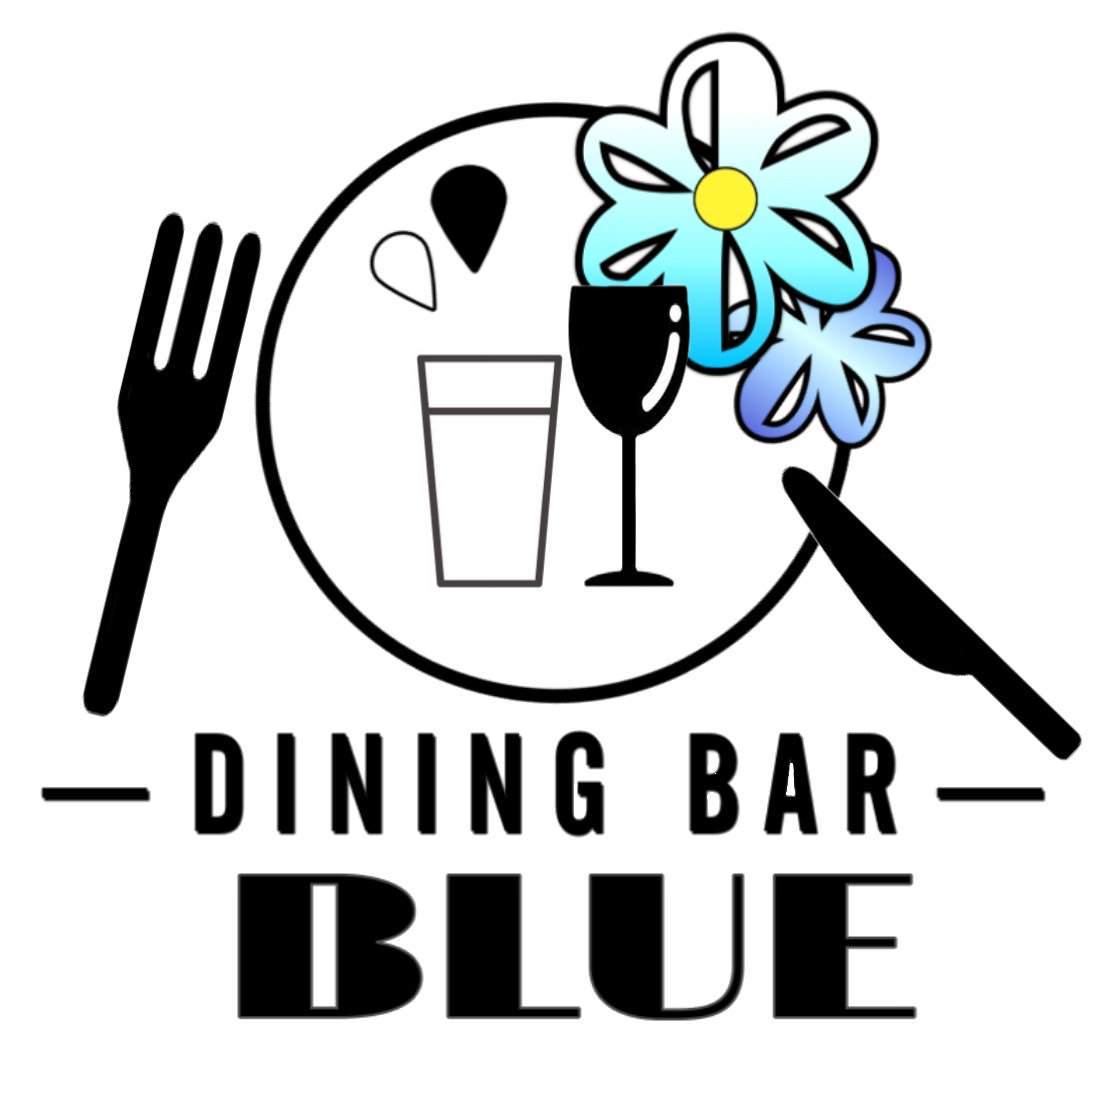 DINING BAR BLUE image